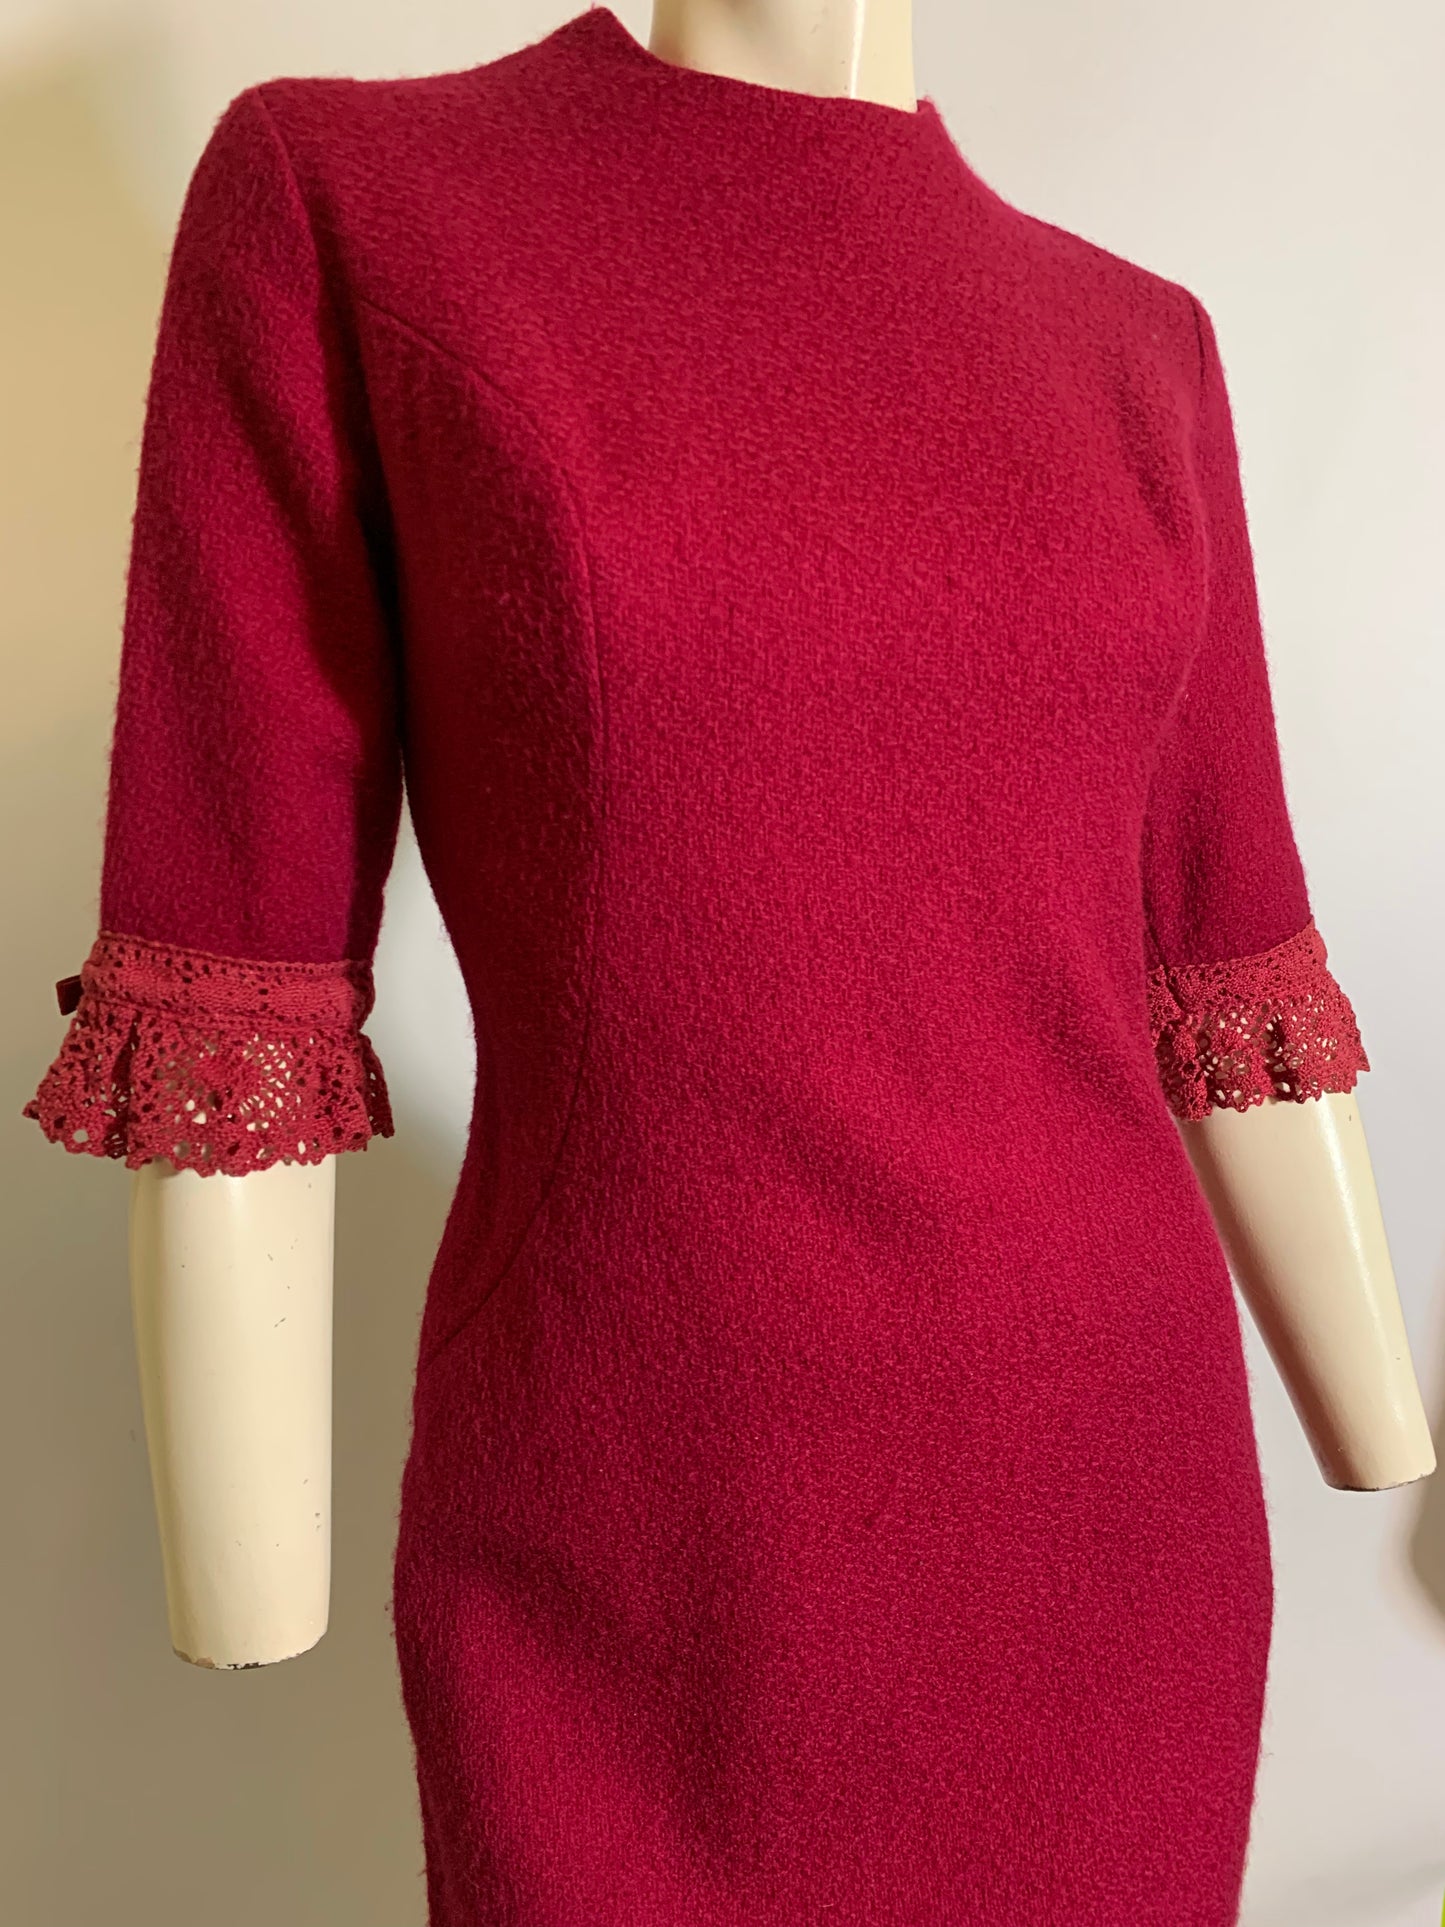 Raspberry Textured Wool Sheath Dress with Lace Cuffs circa 1960s